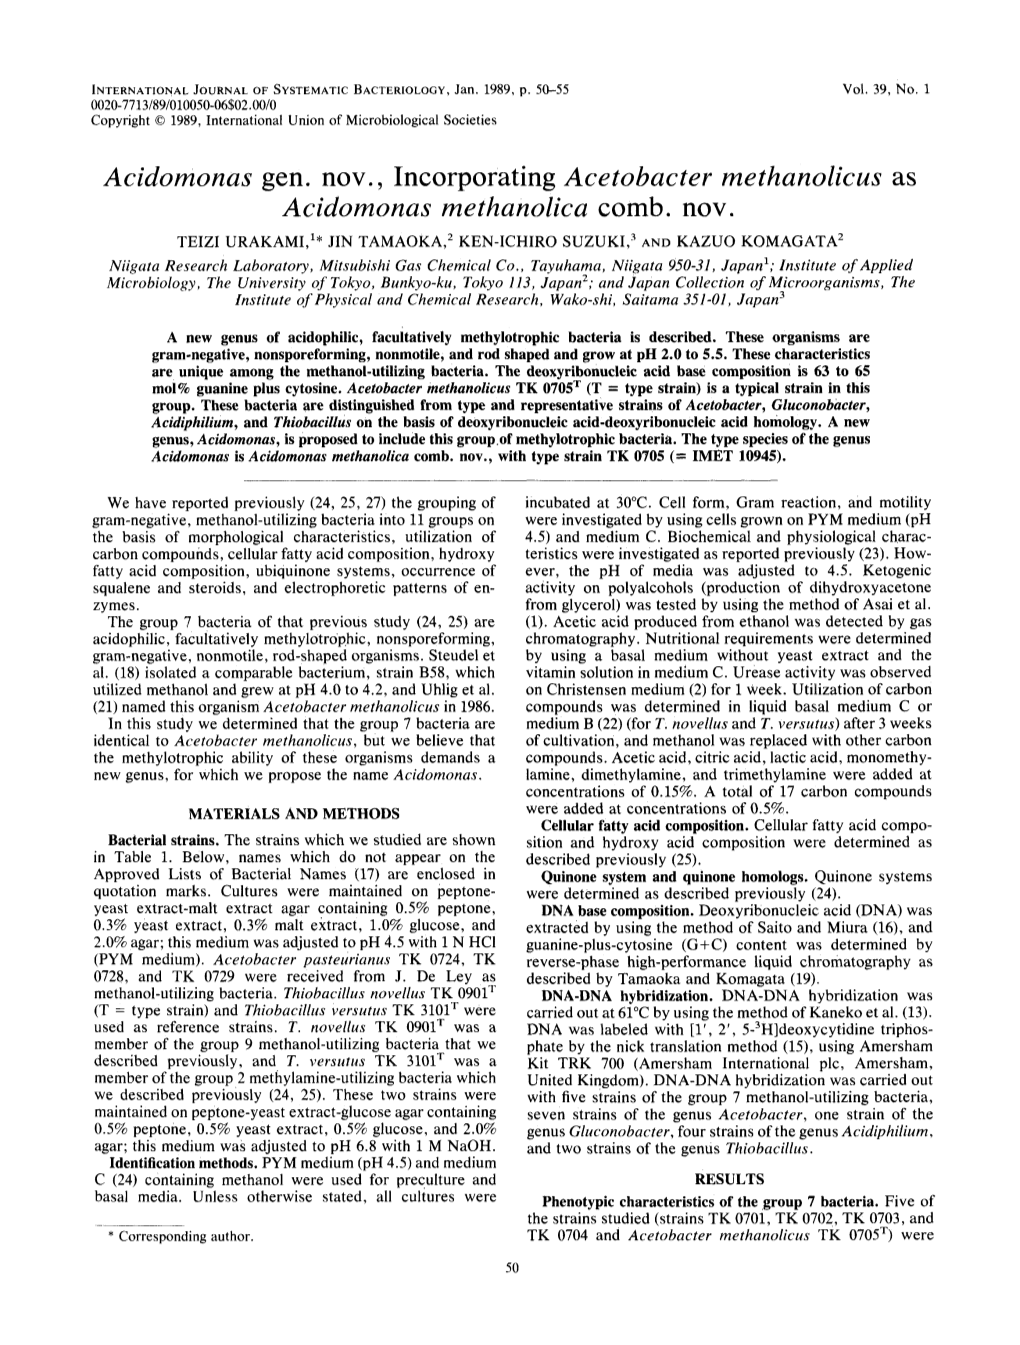 Acidomonas Gen. Nov. Incorporating Acetobacter Methanolicus As Acidomonas Methanolica Comb